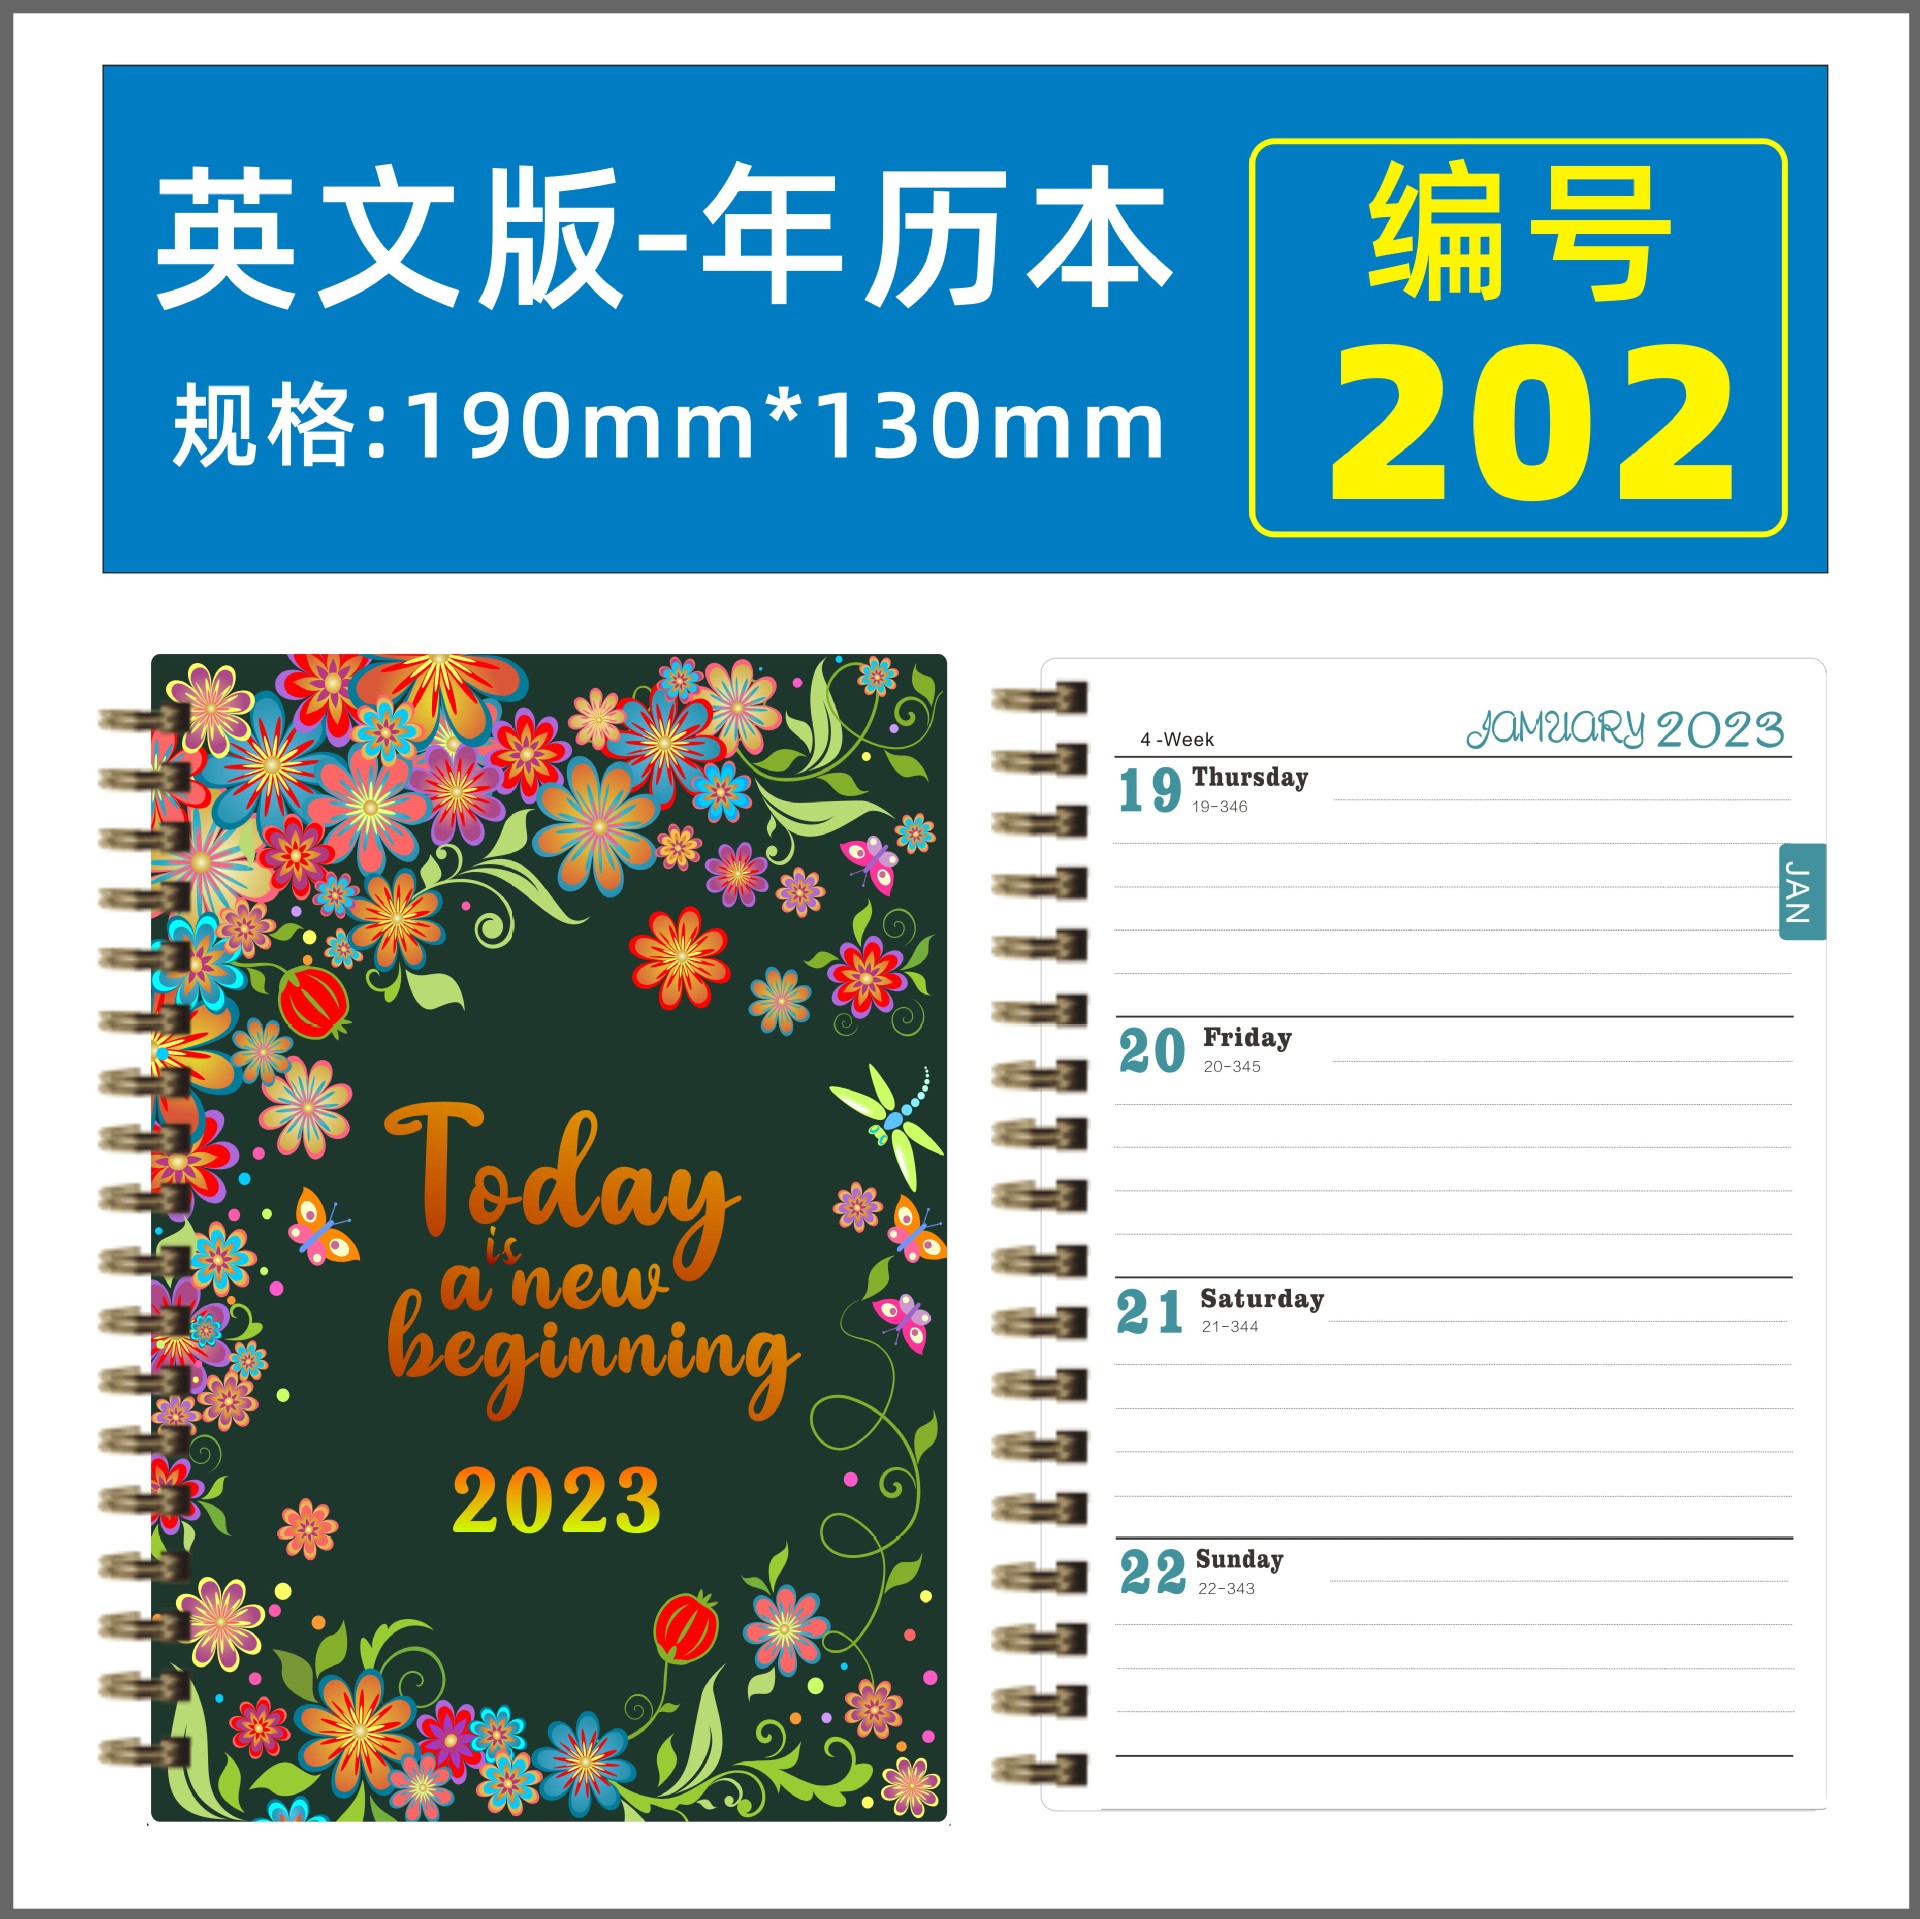 Spot Goods 2023 English Schedule Book Planner Daily Planner Amazon Calendar A5 Coil Notebook